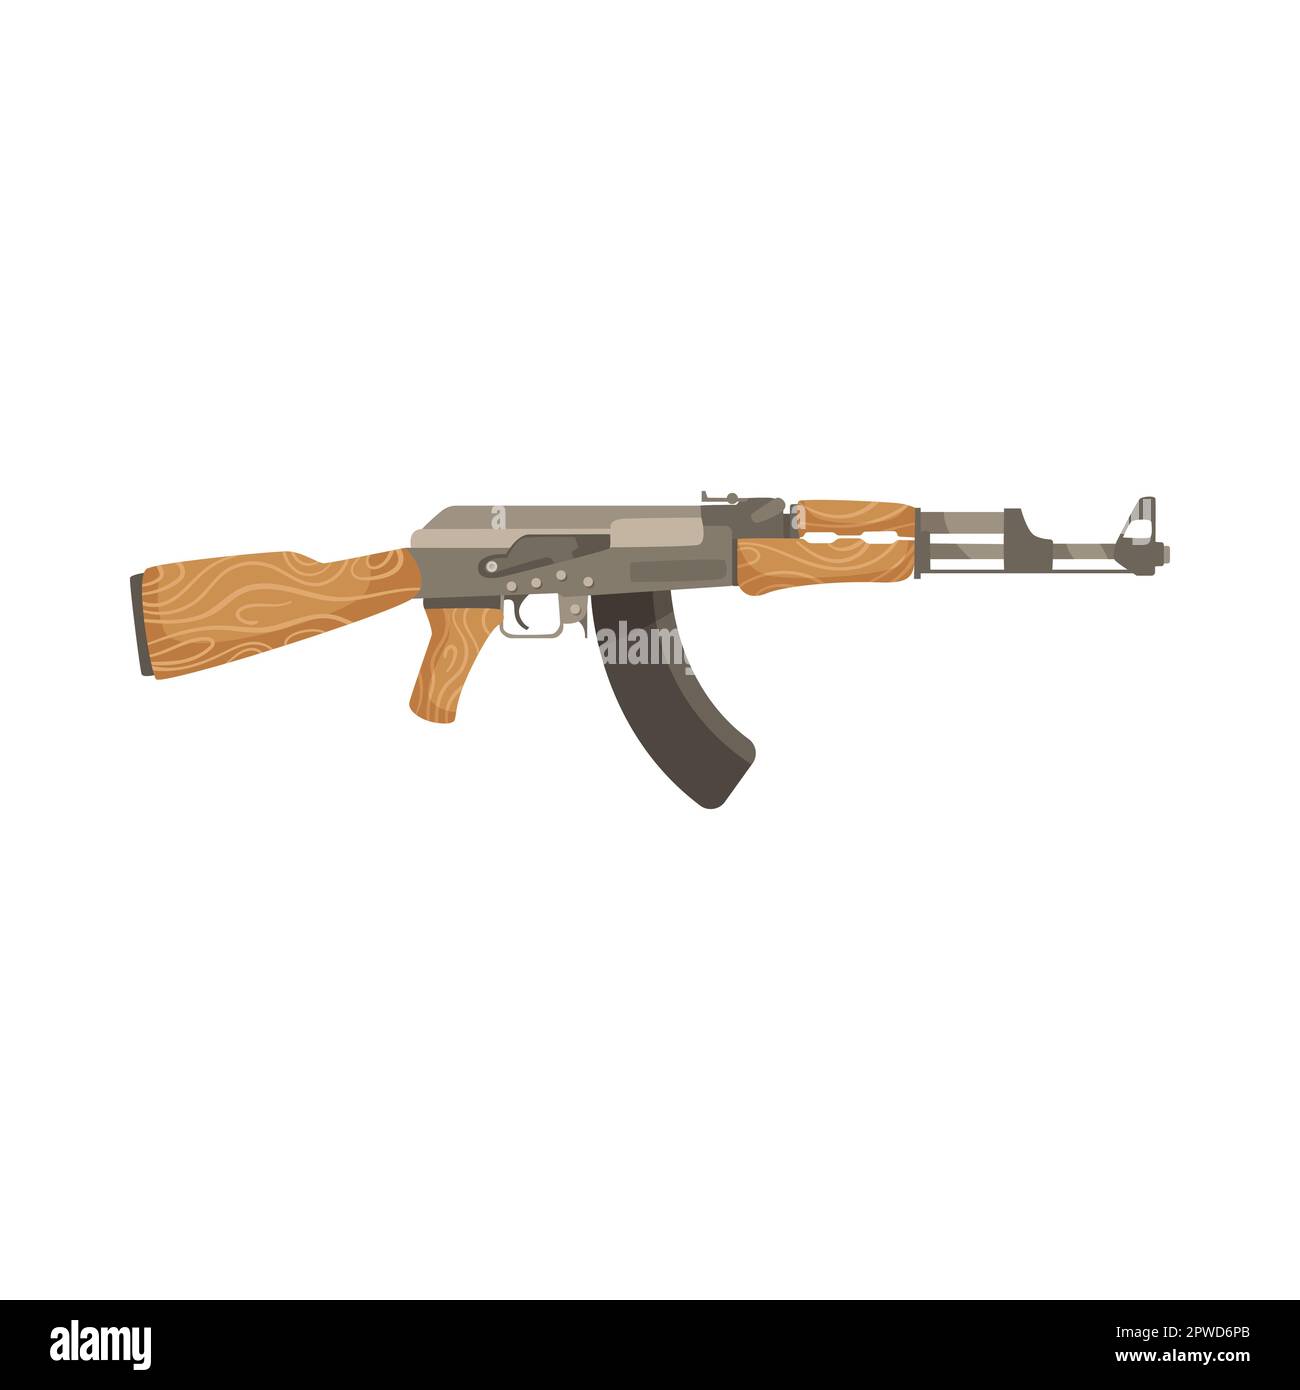 Kalashnikov gun with wooden grip cartoon illustration Stock Vector